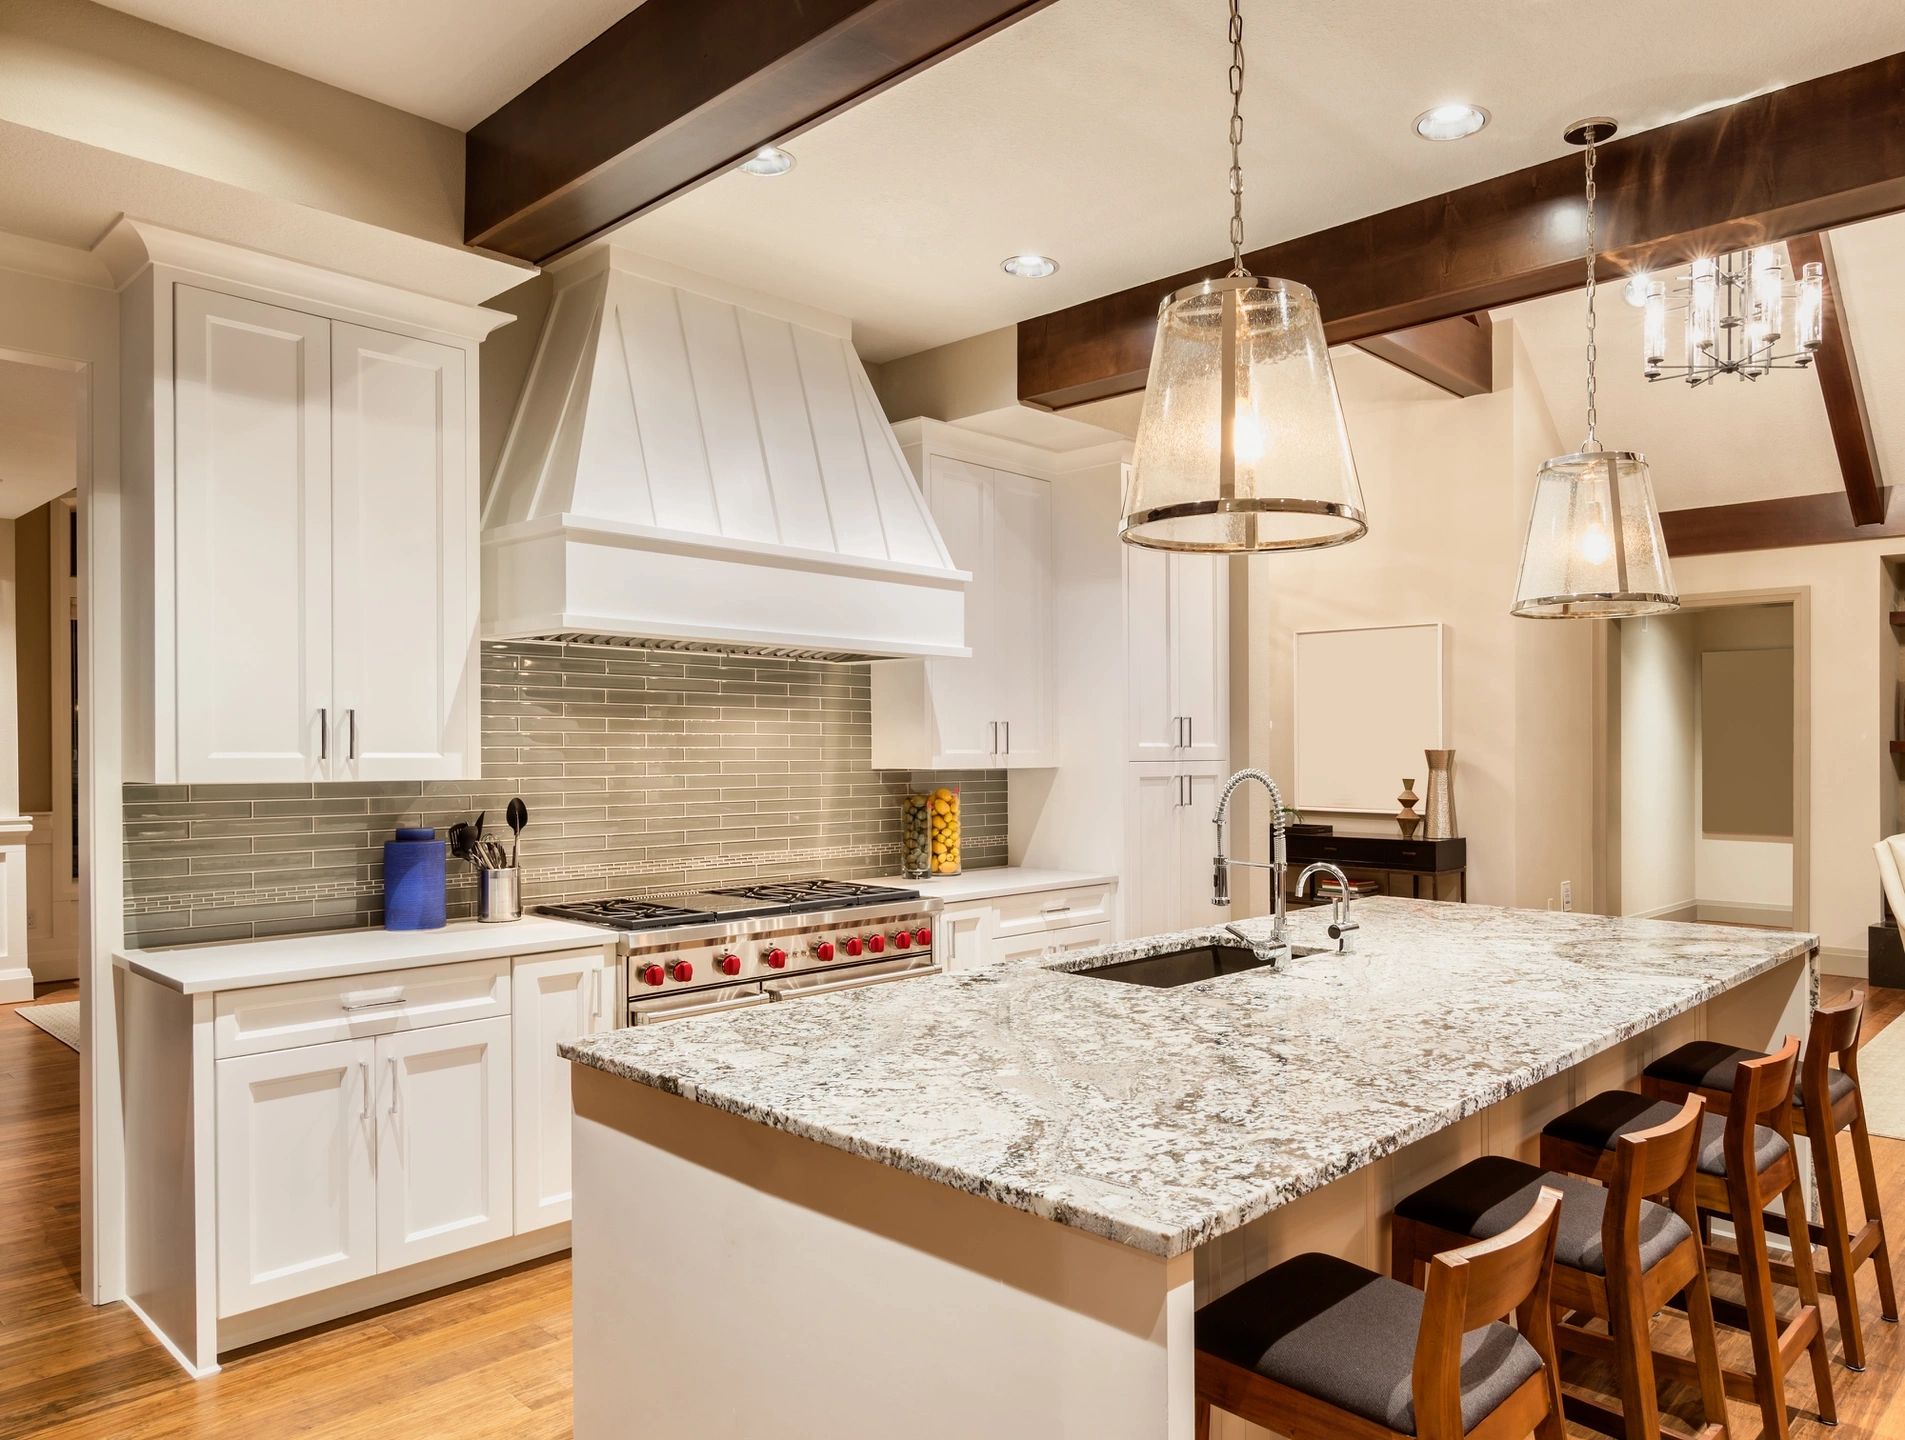 Kitchen renovation with new backsplash tile, cabinets, counter tops and hardwood floor